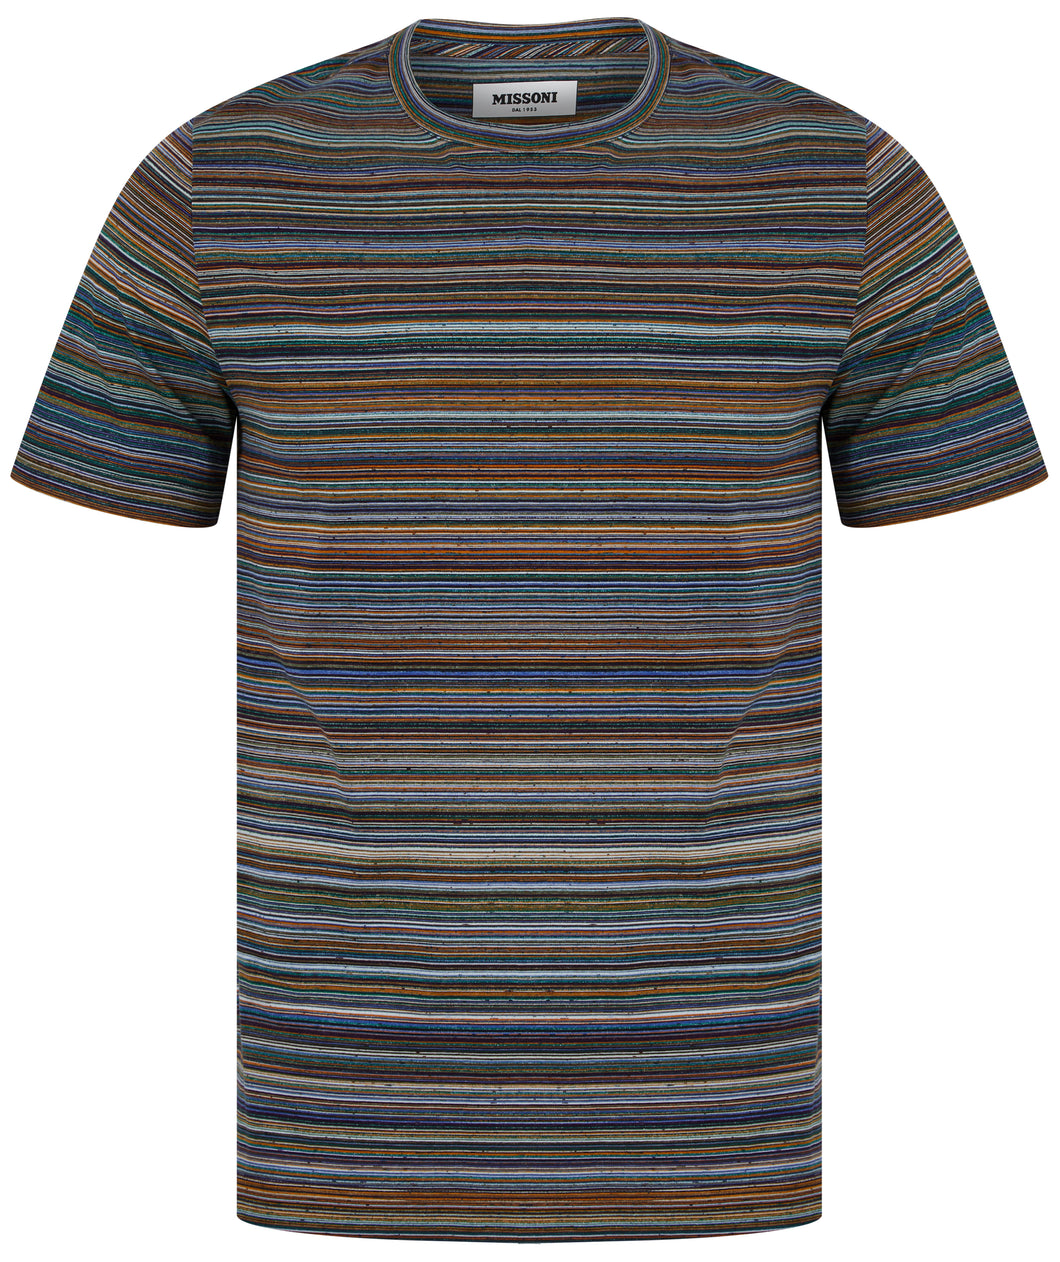 Missoni Stripe T Shirt Khaki